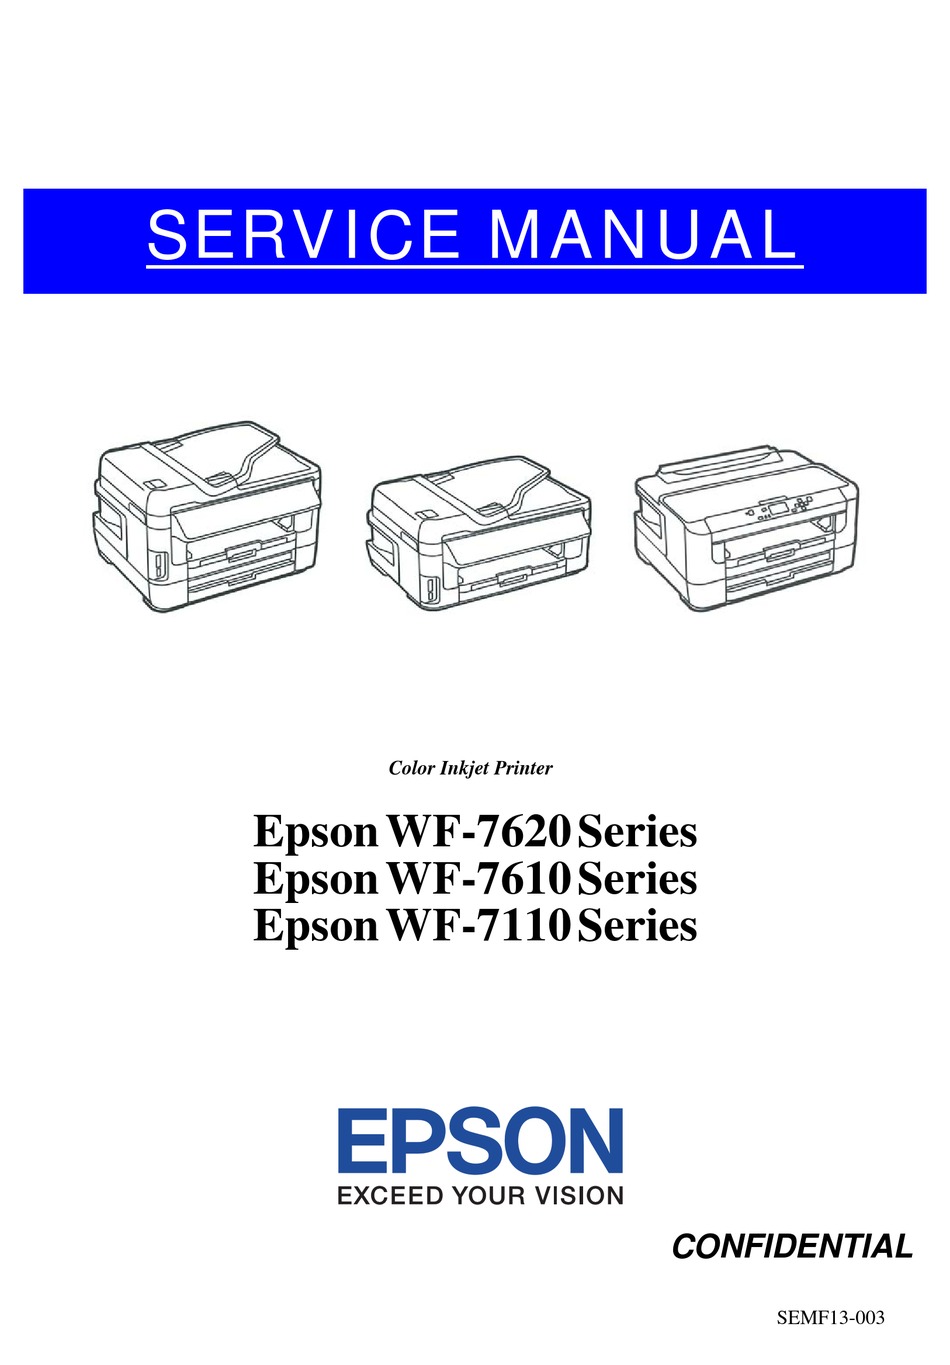 EPSON WF-7620 SERIES SERVICE MANUAL Pdf Download | ManualsLib